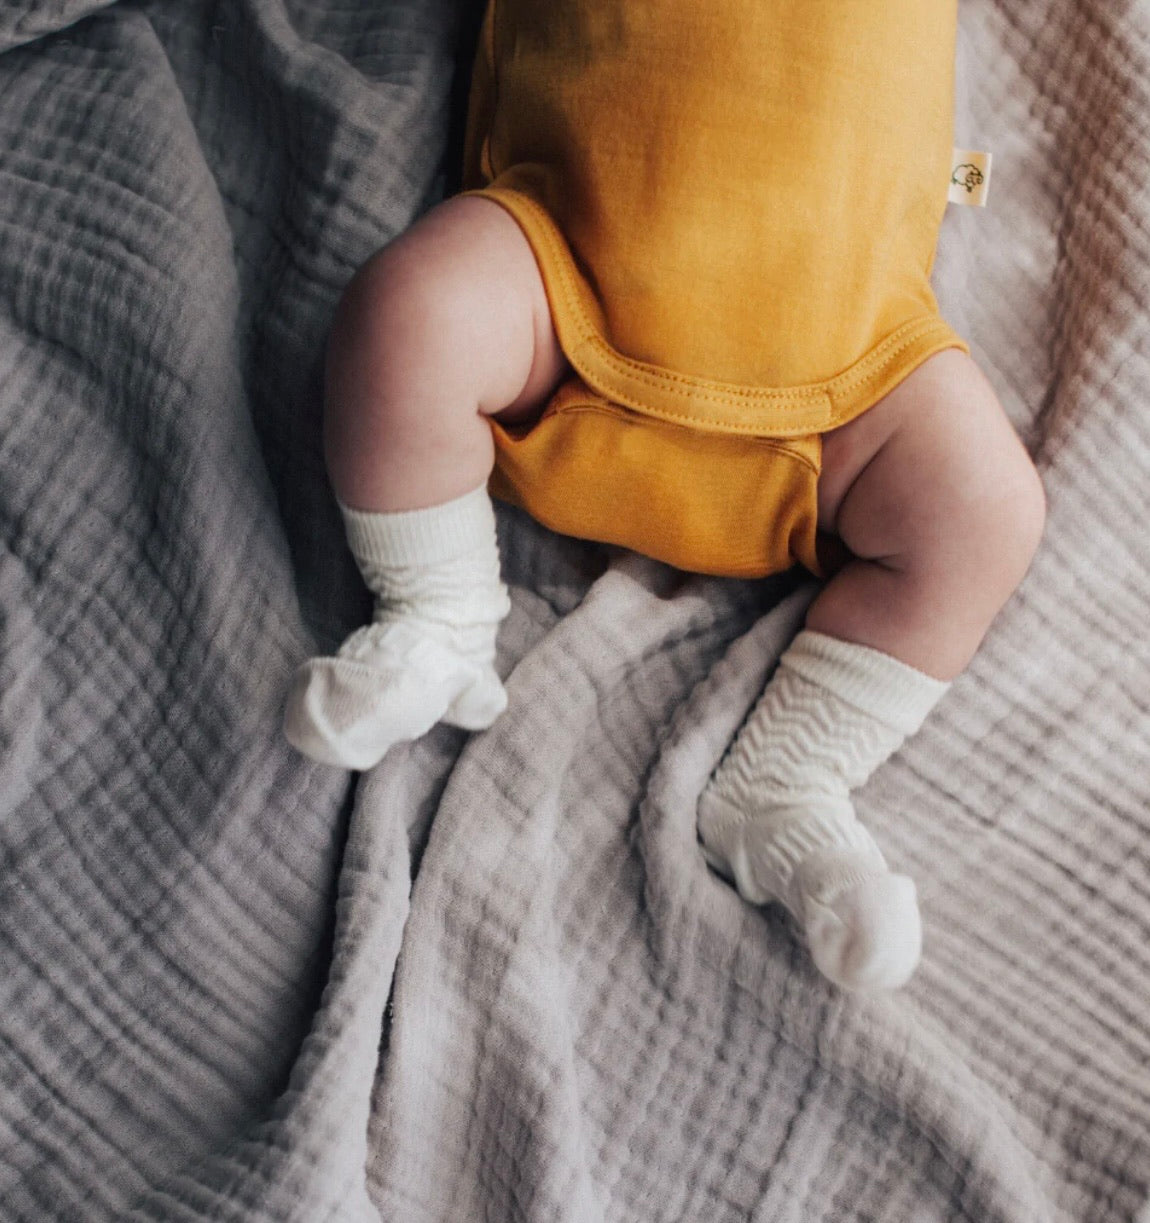 Lamington | Merino Wool Crew Socks | Newborn Natural | Pearl